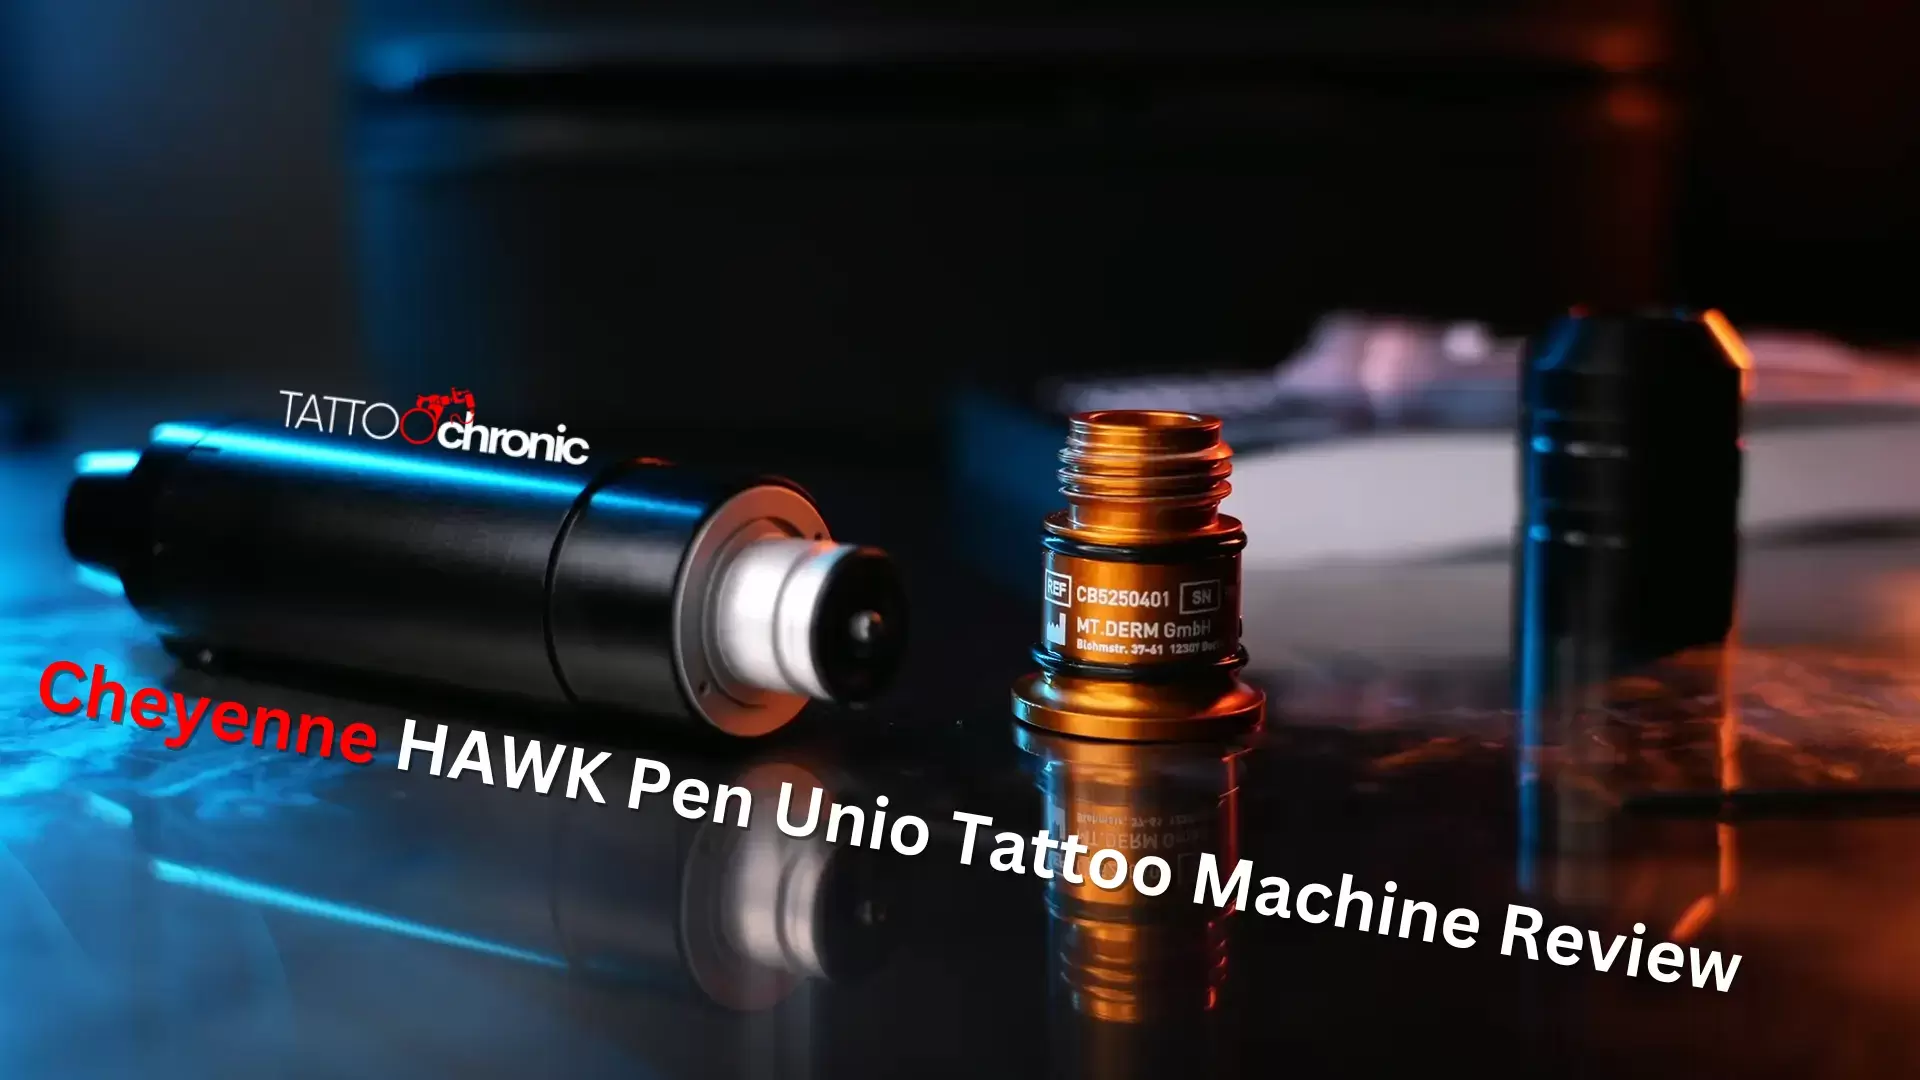 Cheyenne HAWK Pen Unio Tattoo Machine Review